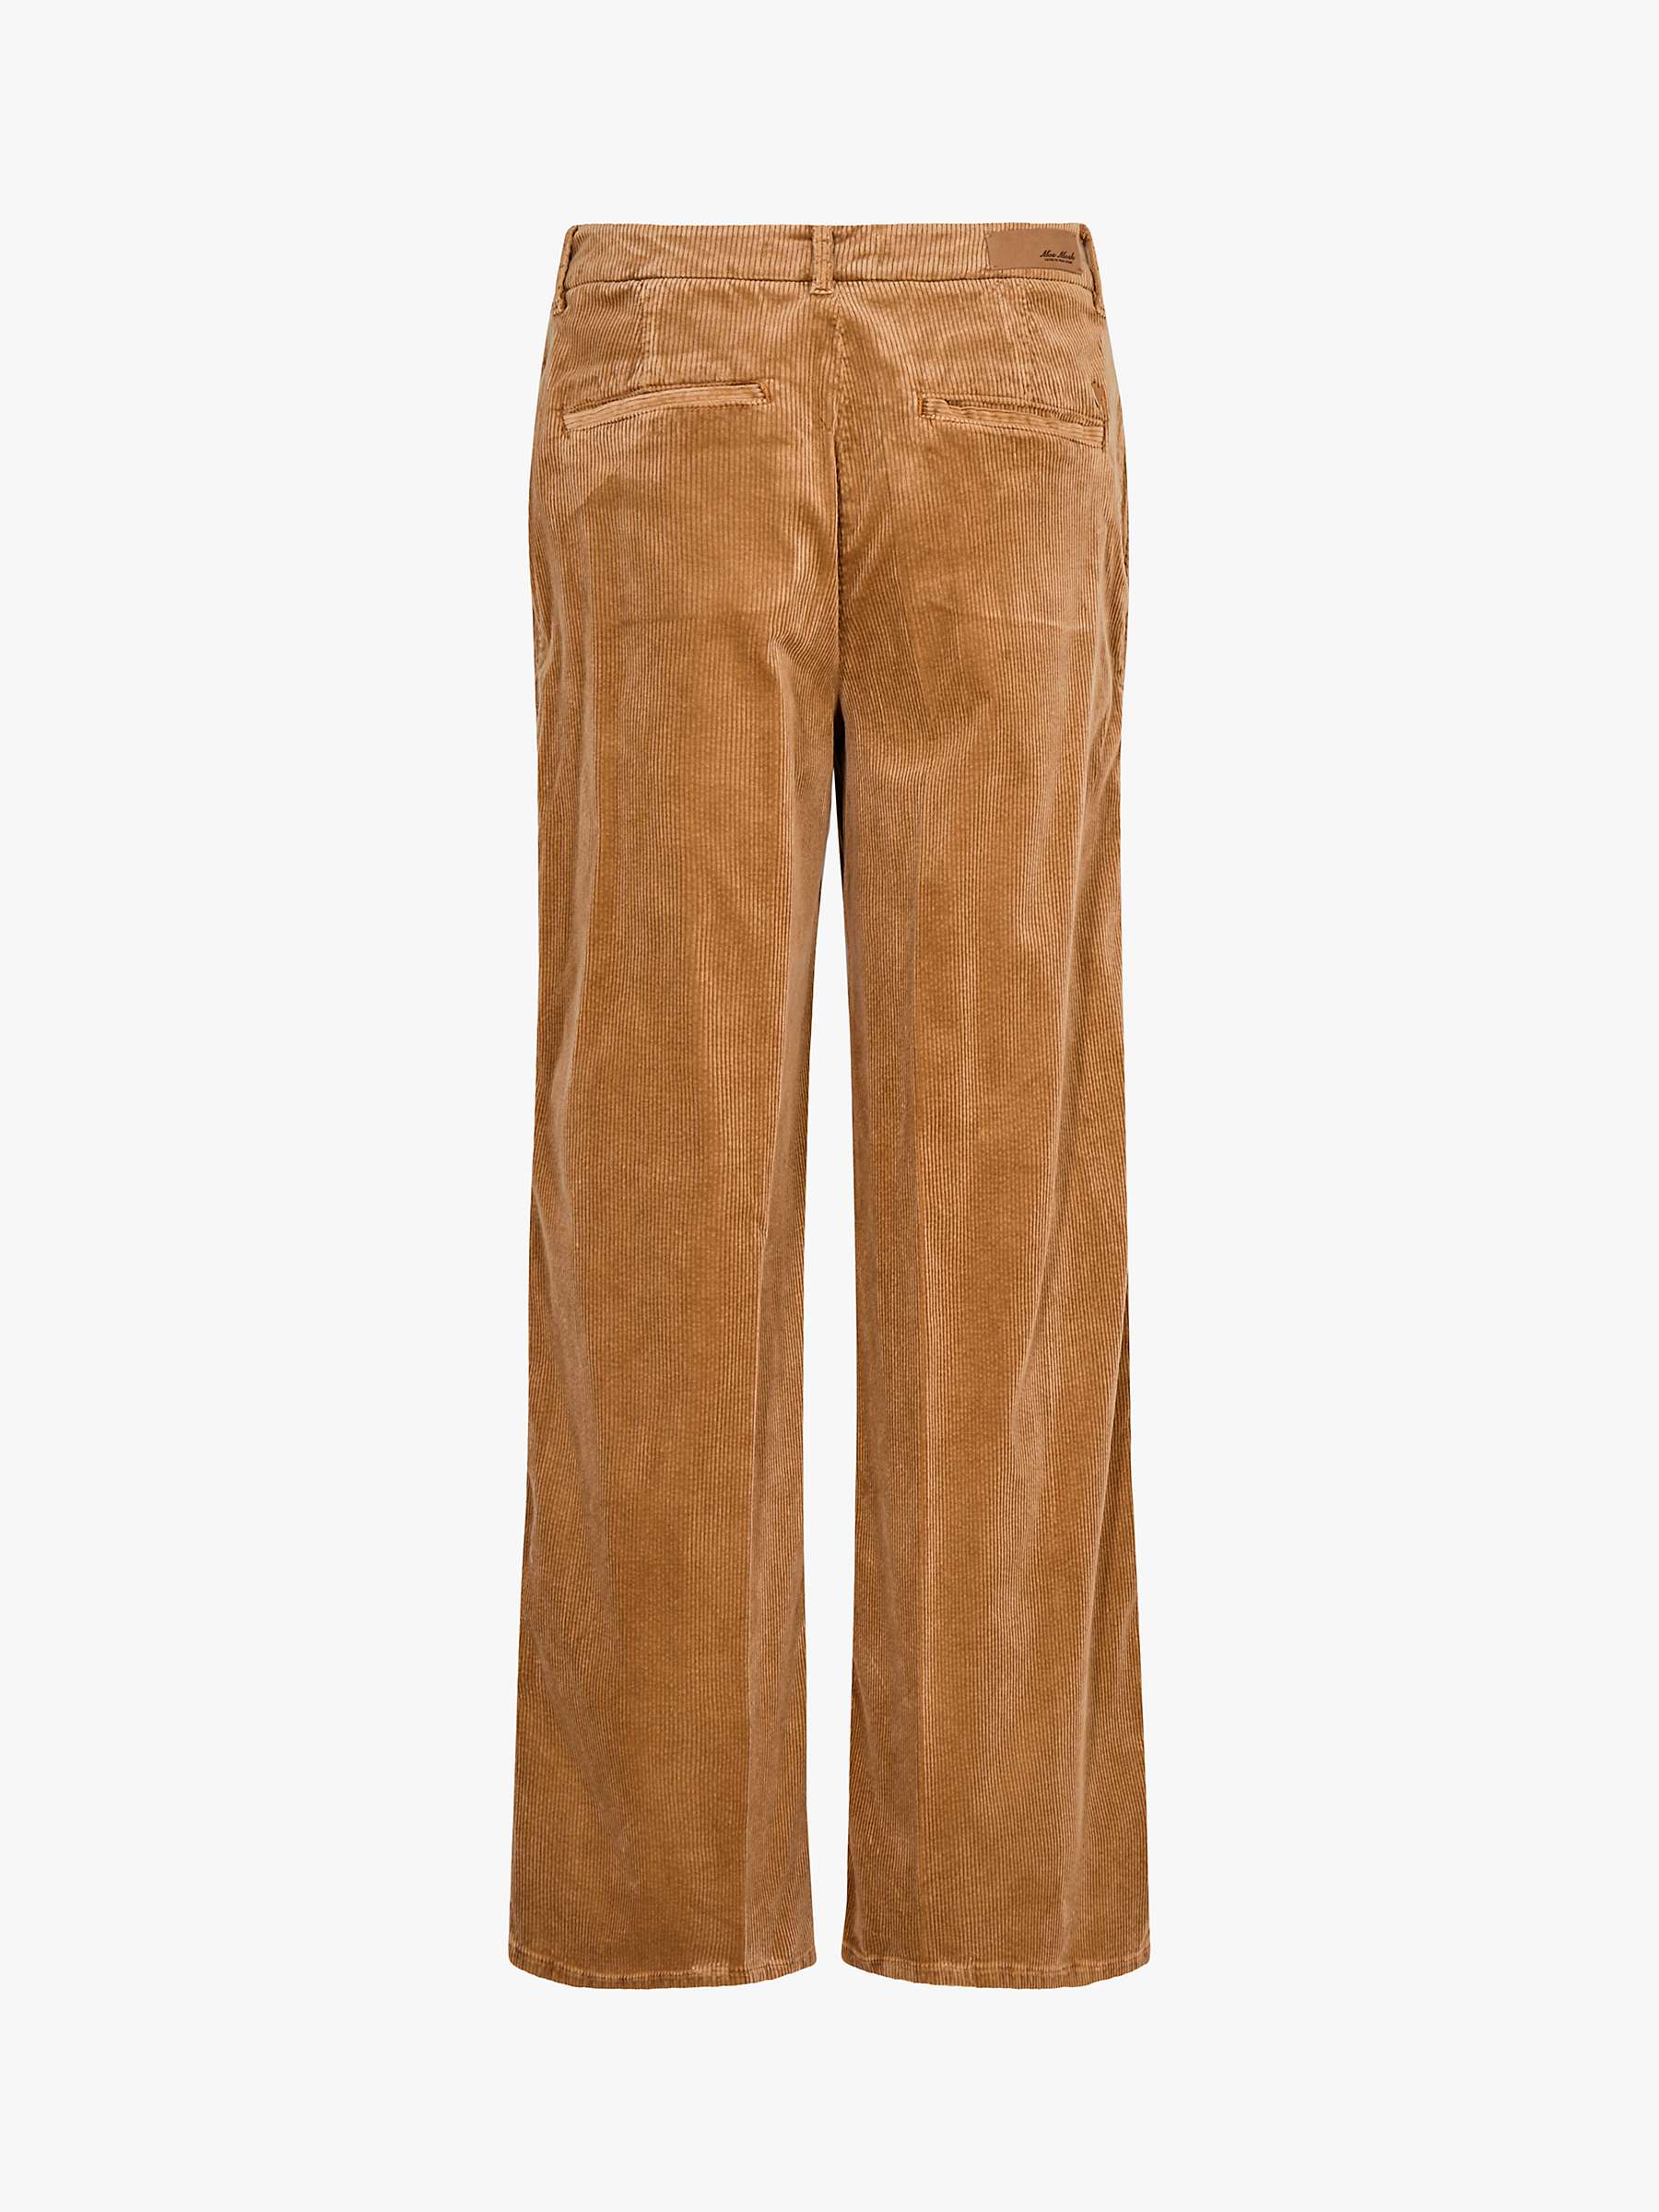 Buy MOS MOSH Isha Corduroy Trousers, Chipmunk Online at johnlewis.com